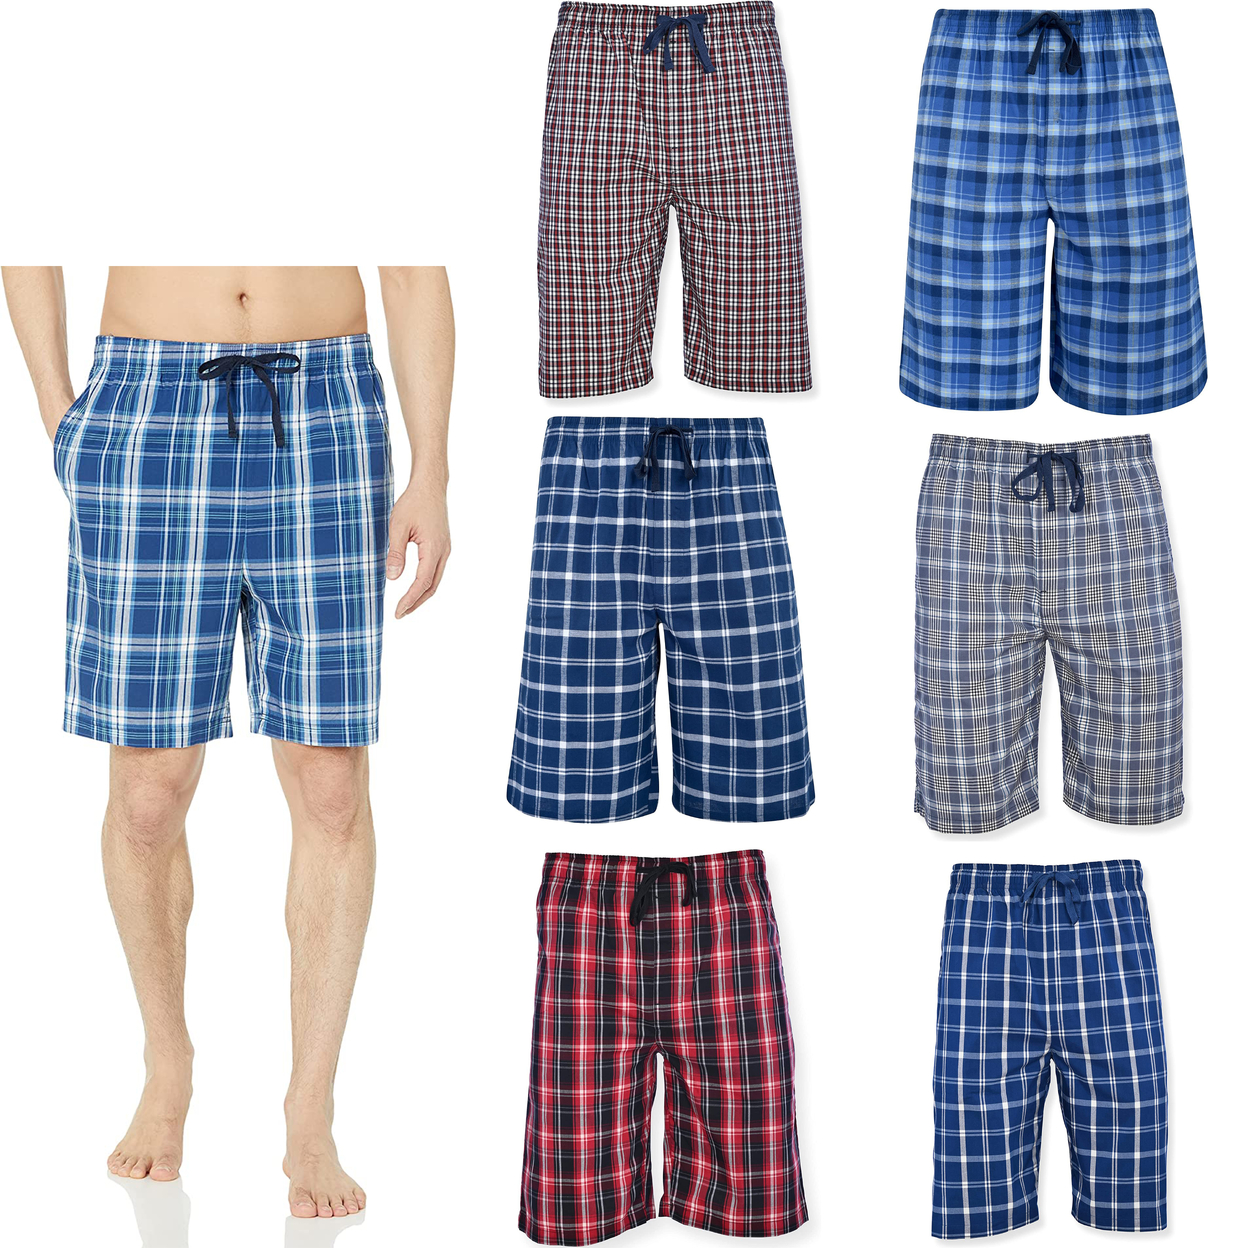 2-Pack: Men's Ultra Soft Plaid Lounge Pajama Sleep Wear Shorts - Red & Tan, Small